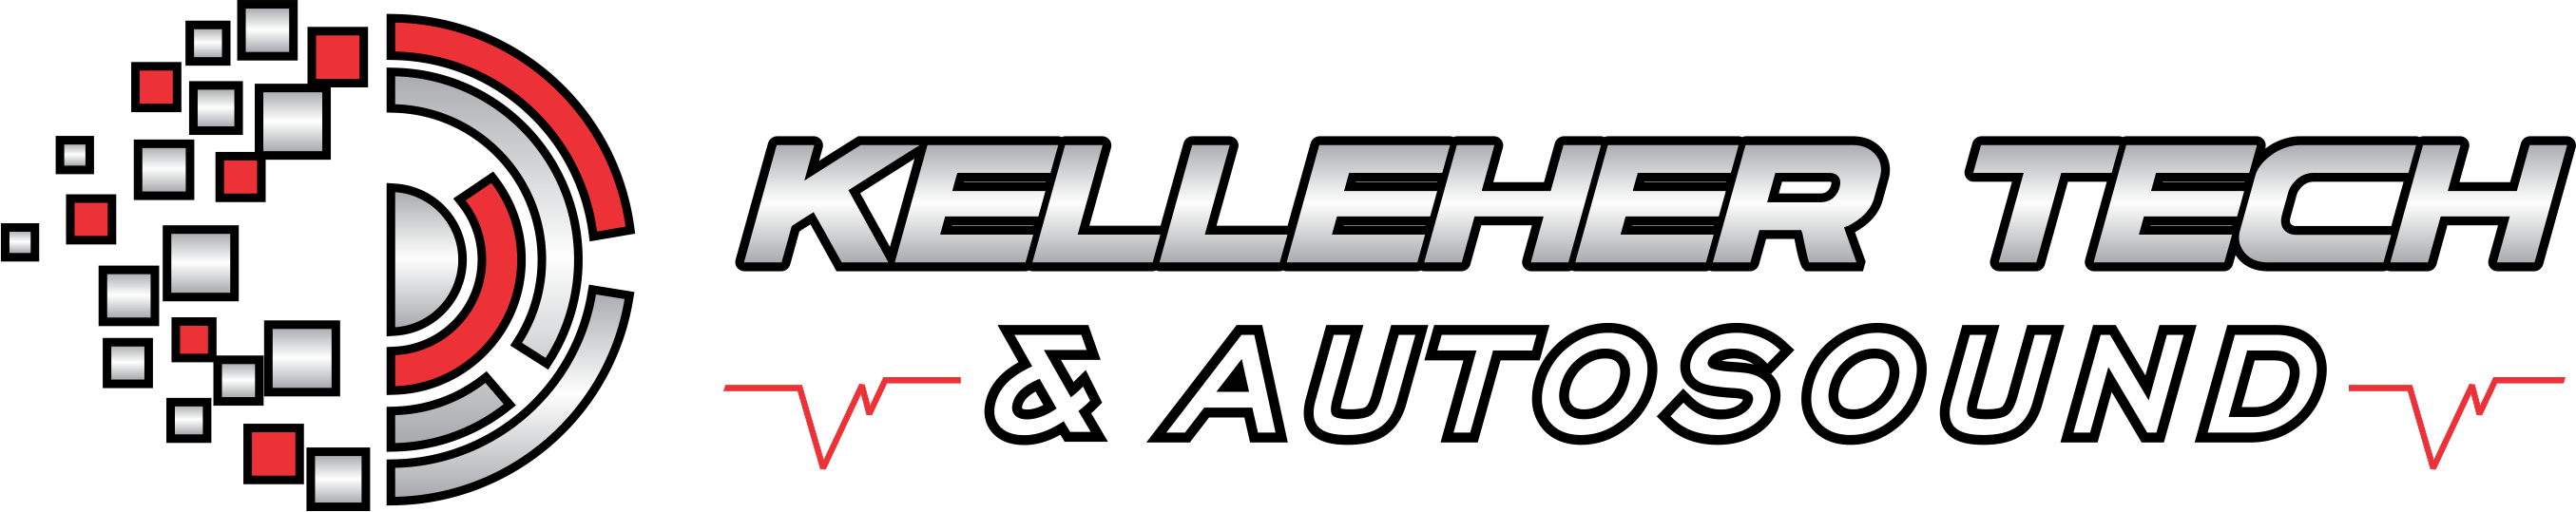 Kelleher Tech and Autosound